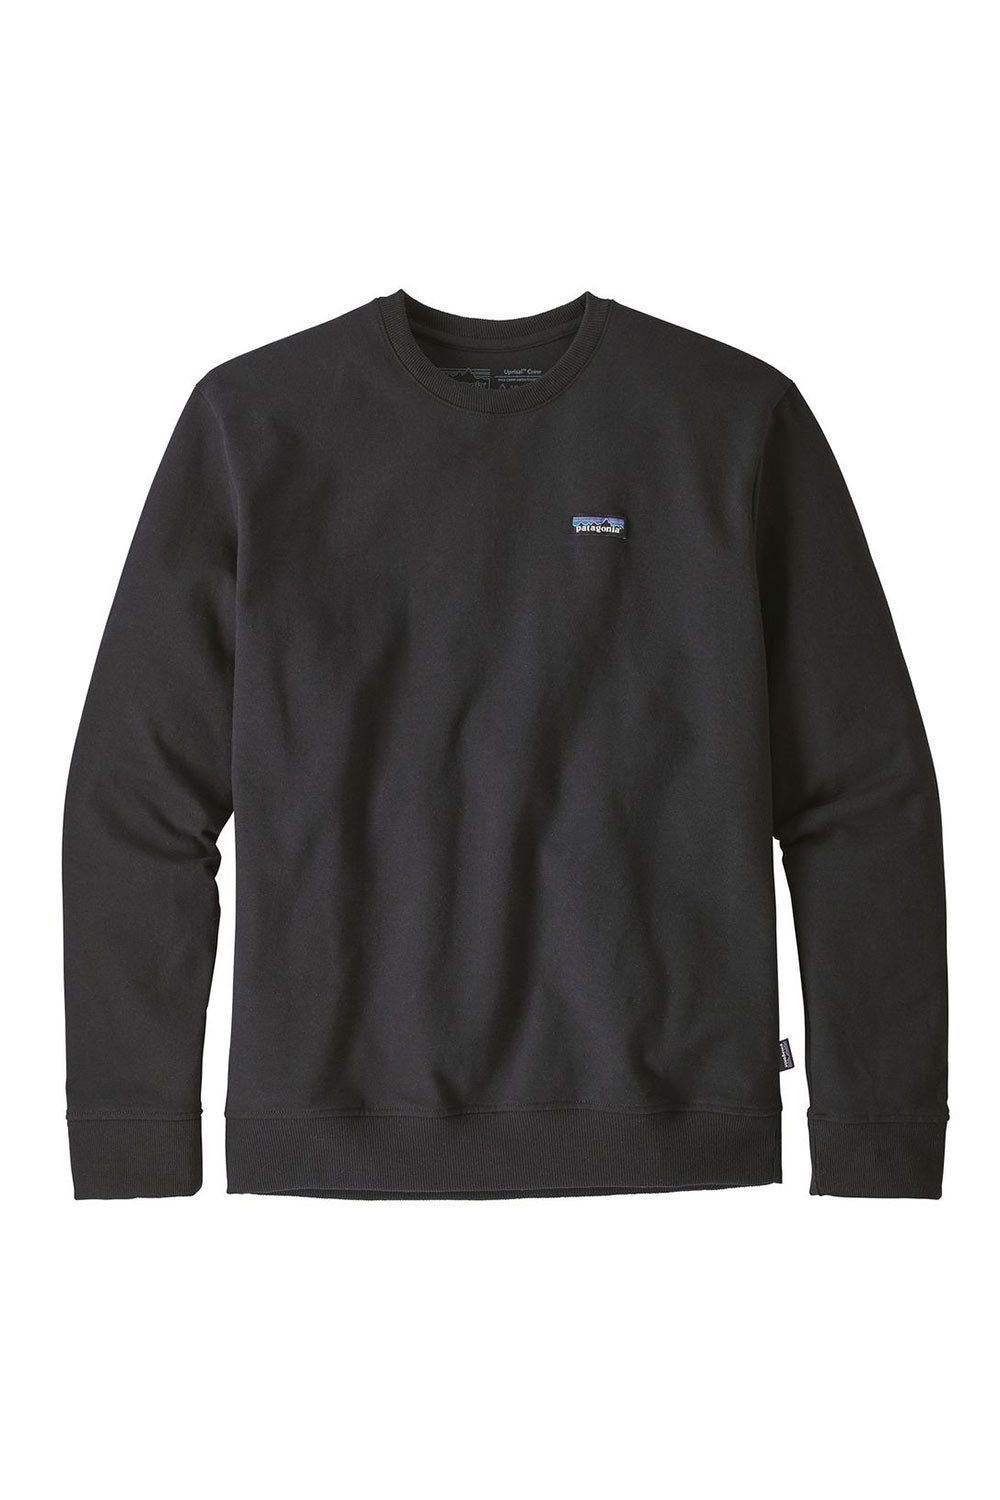 Shop Patagonia | Men's P-6 Label Uprisal Crew Sweatshirt - Black